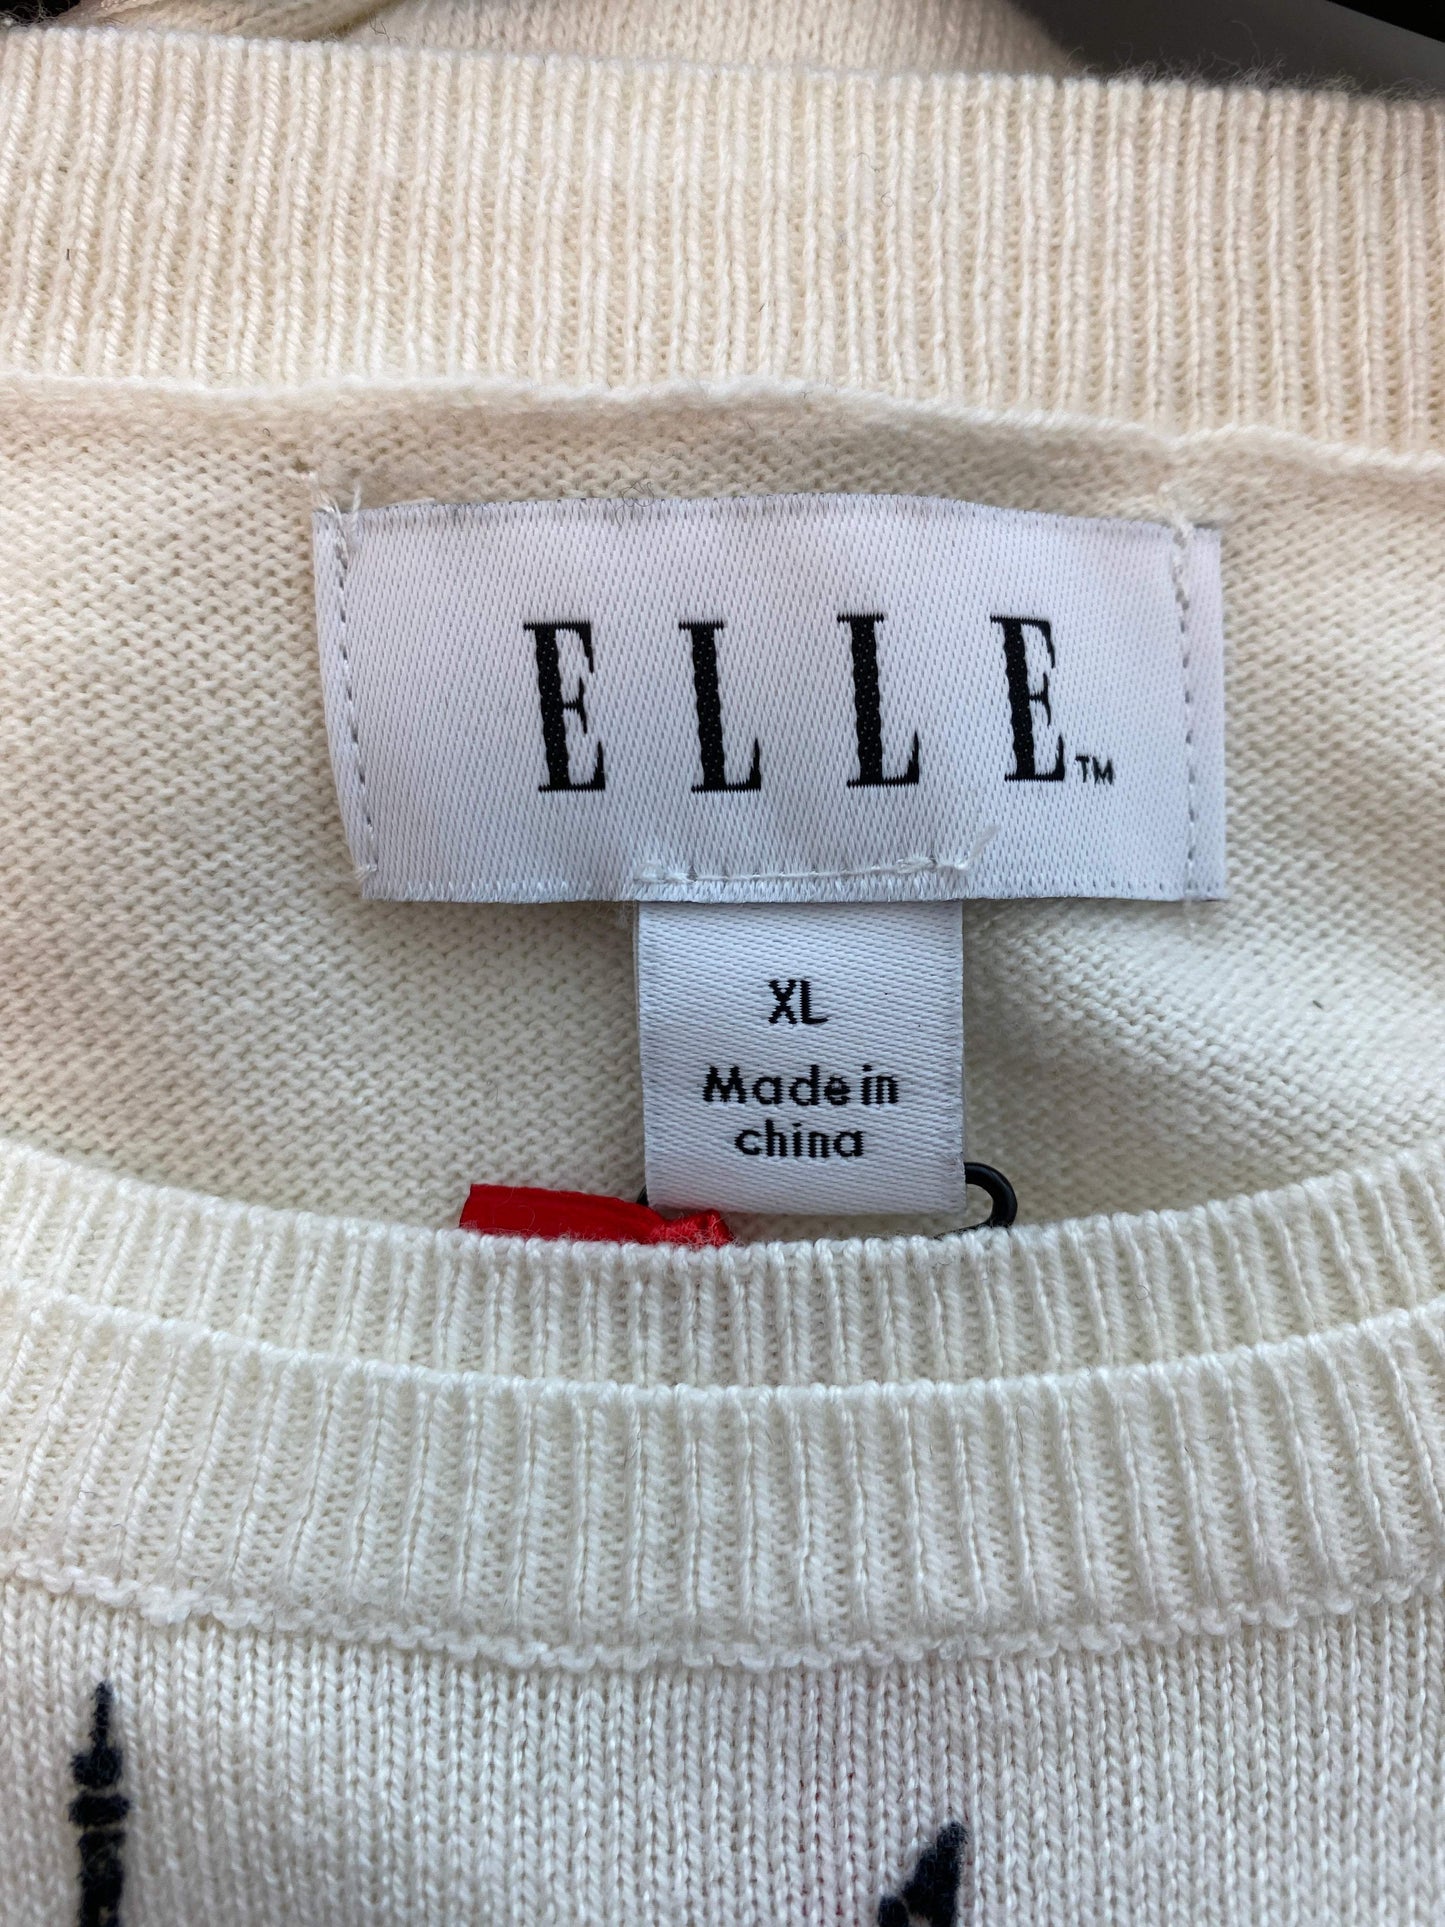 Elle XL Cream Cotton Sweater NWT